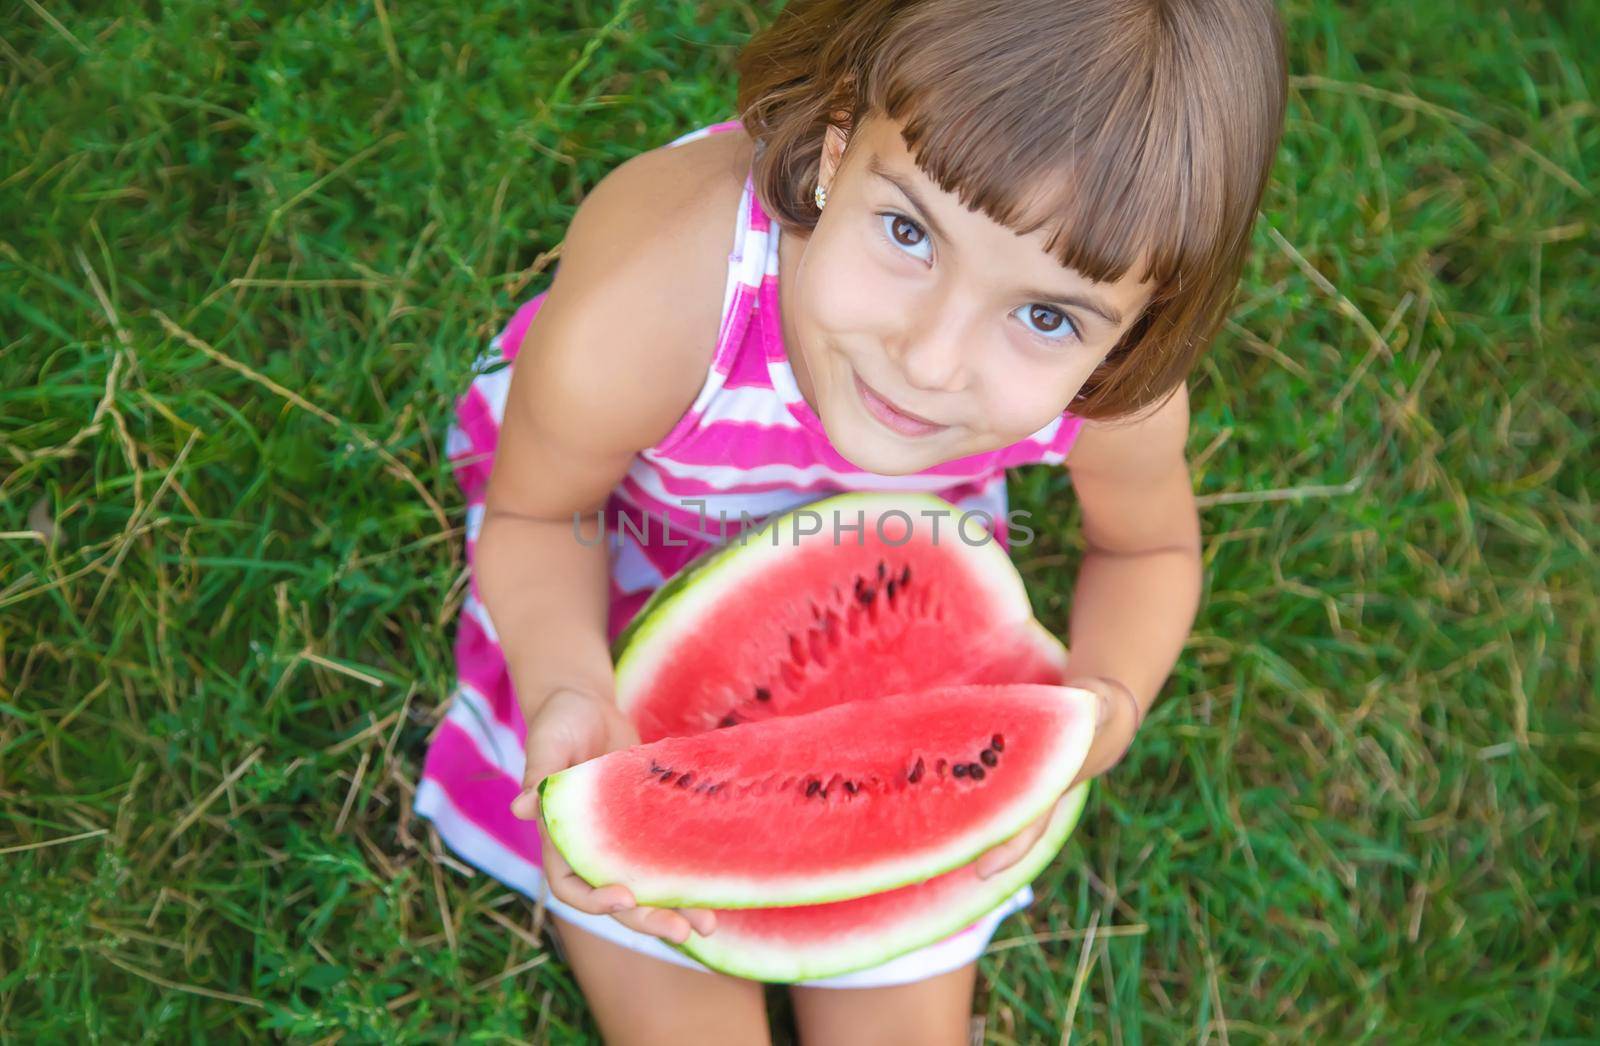 child eats a watermelon in the garden. Selective focus.